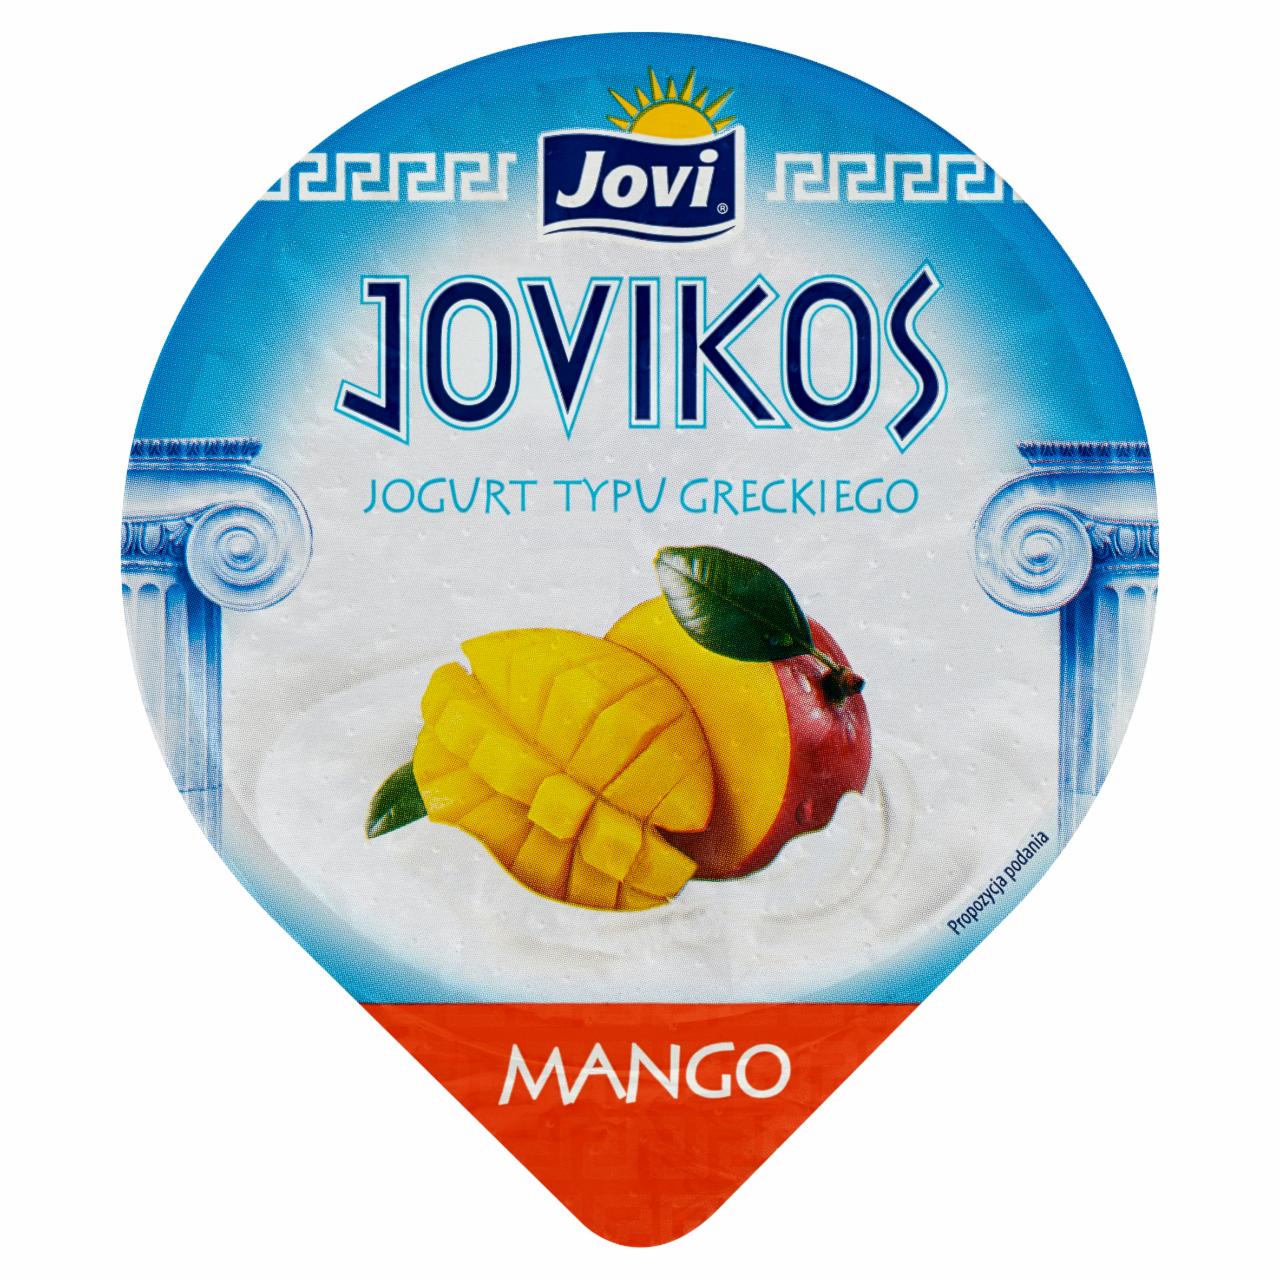 Zdjęcia - Jovi Jovikos Jogurt typu greckiego mango 150 g